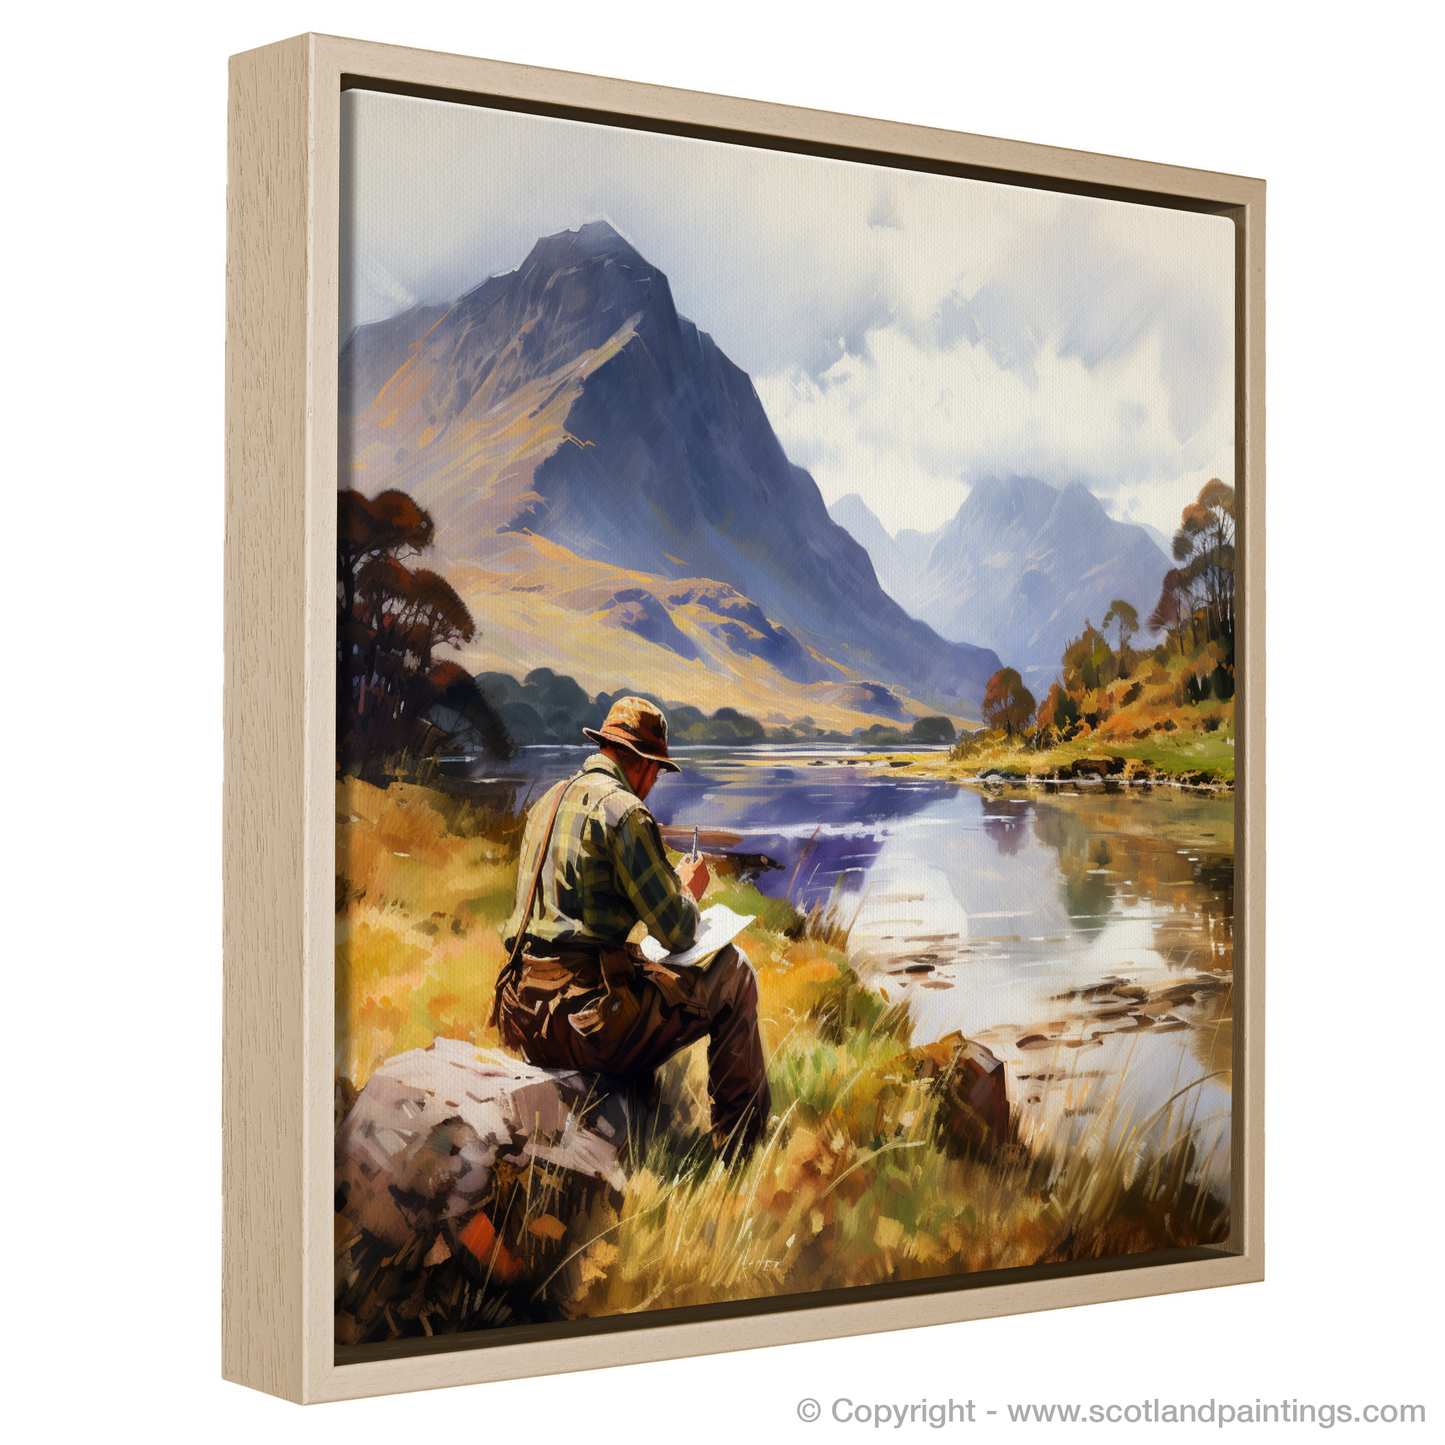 Highland Reverie: A Sketch of Glencoe's Grandeur